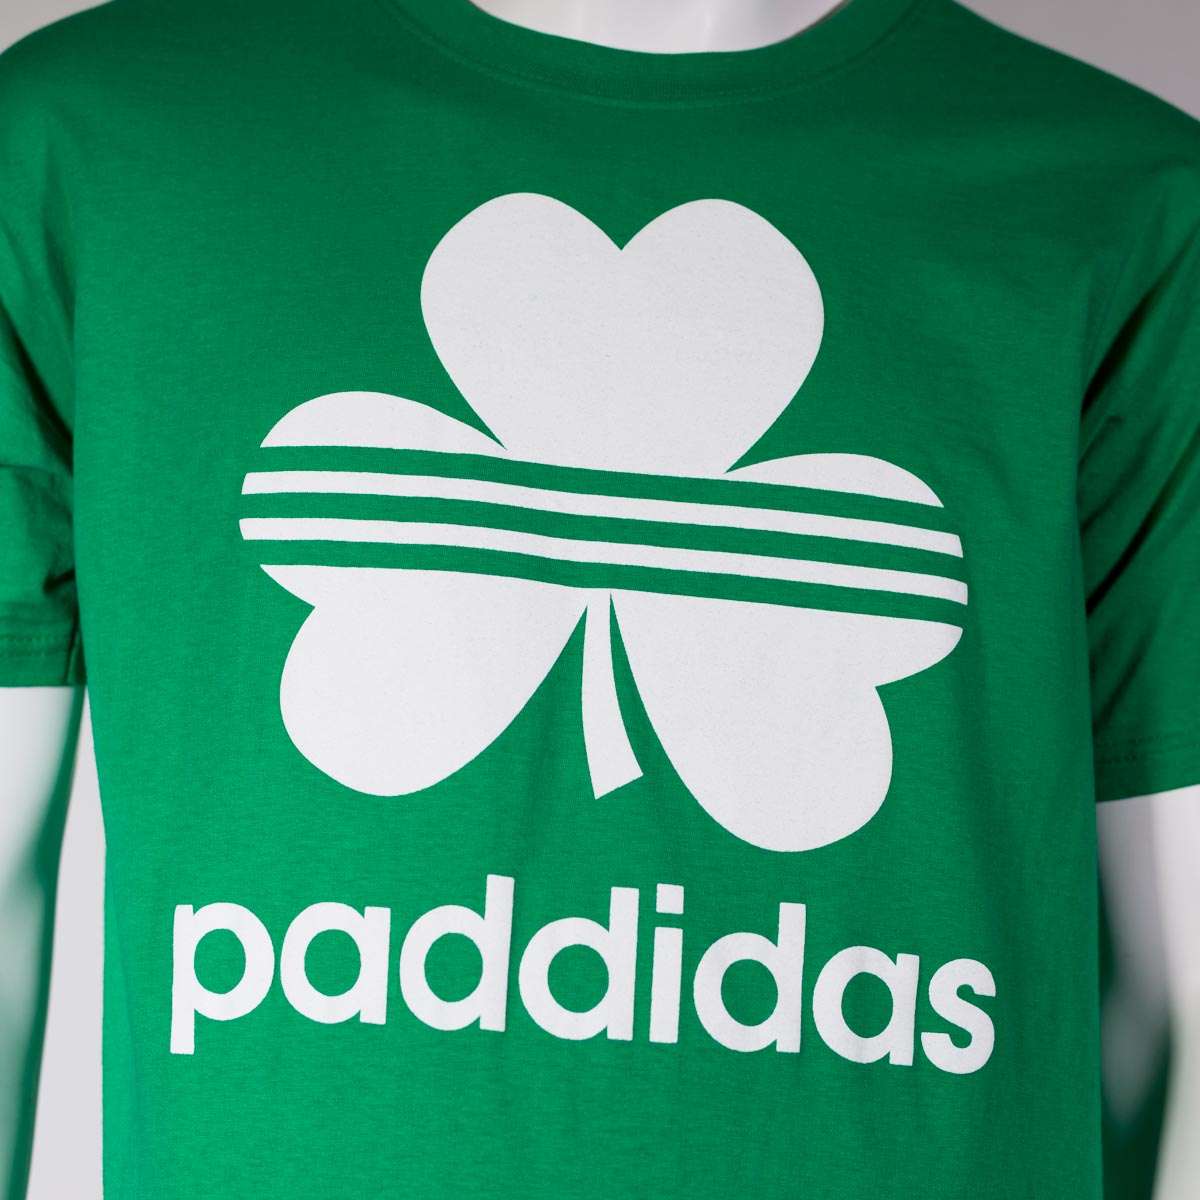 Paddidas Green Shamrock Shirt